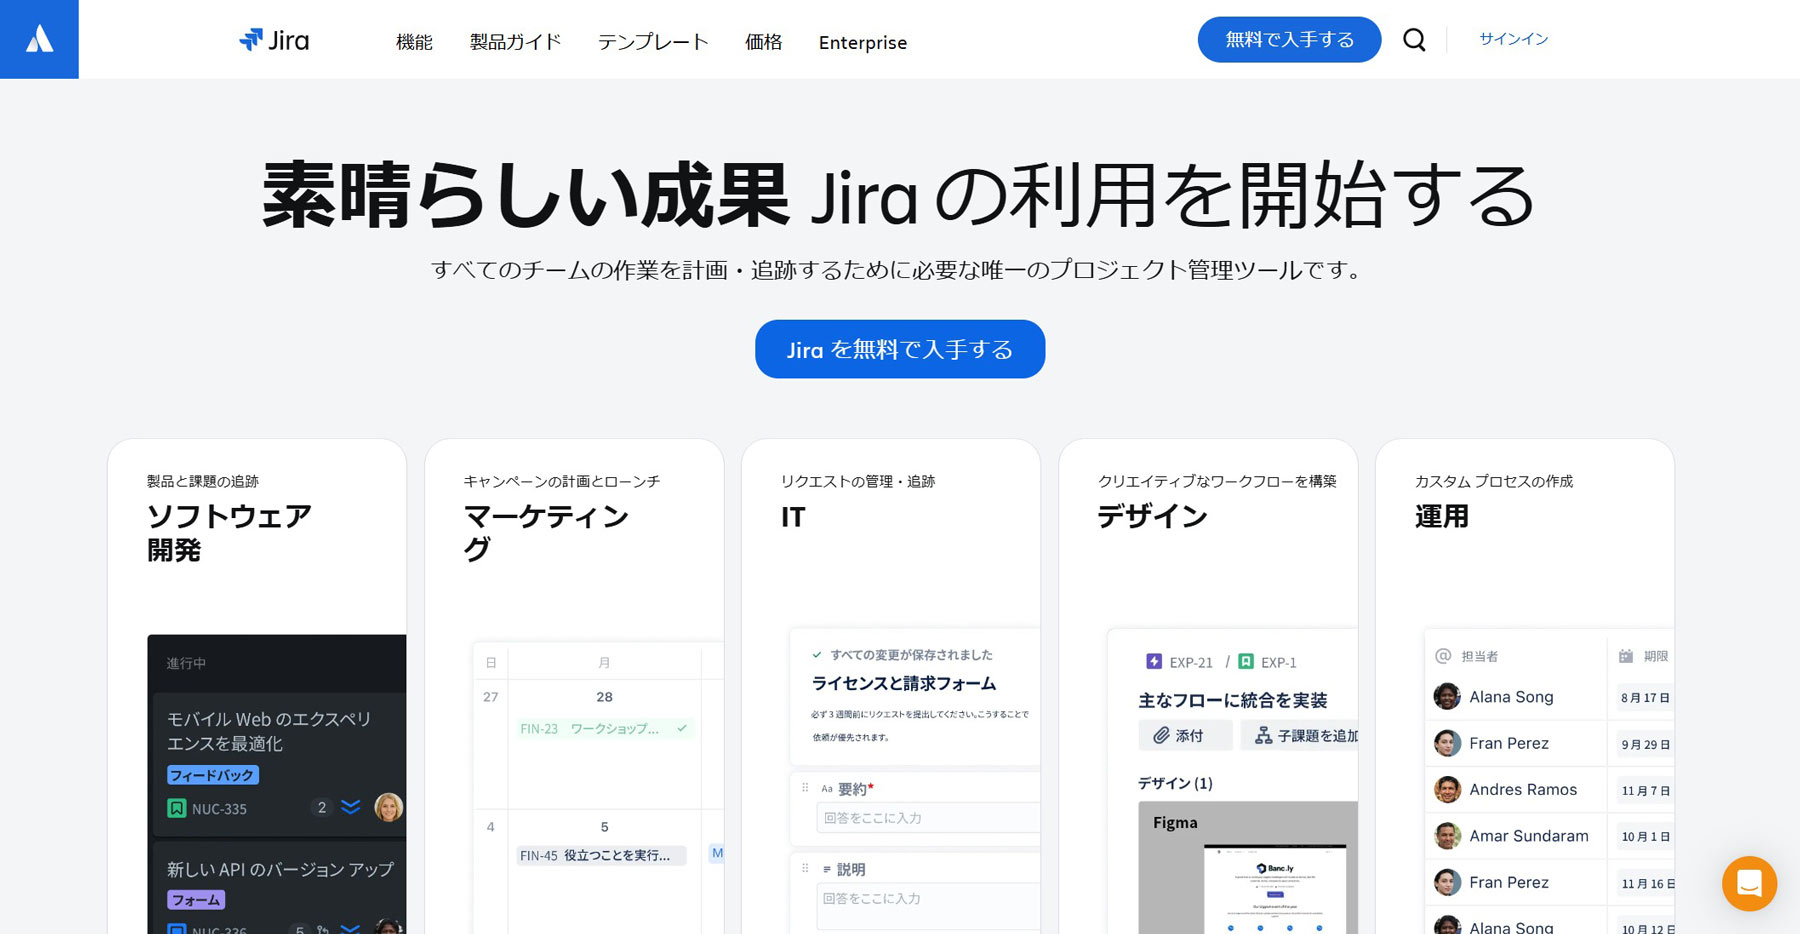 Jira Software公式Webサイト